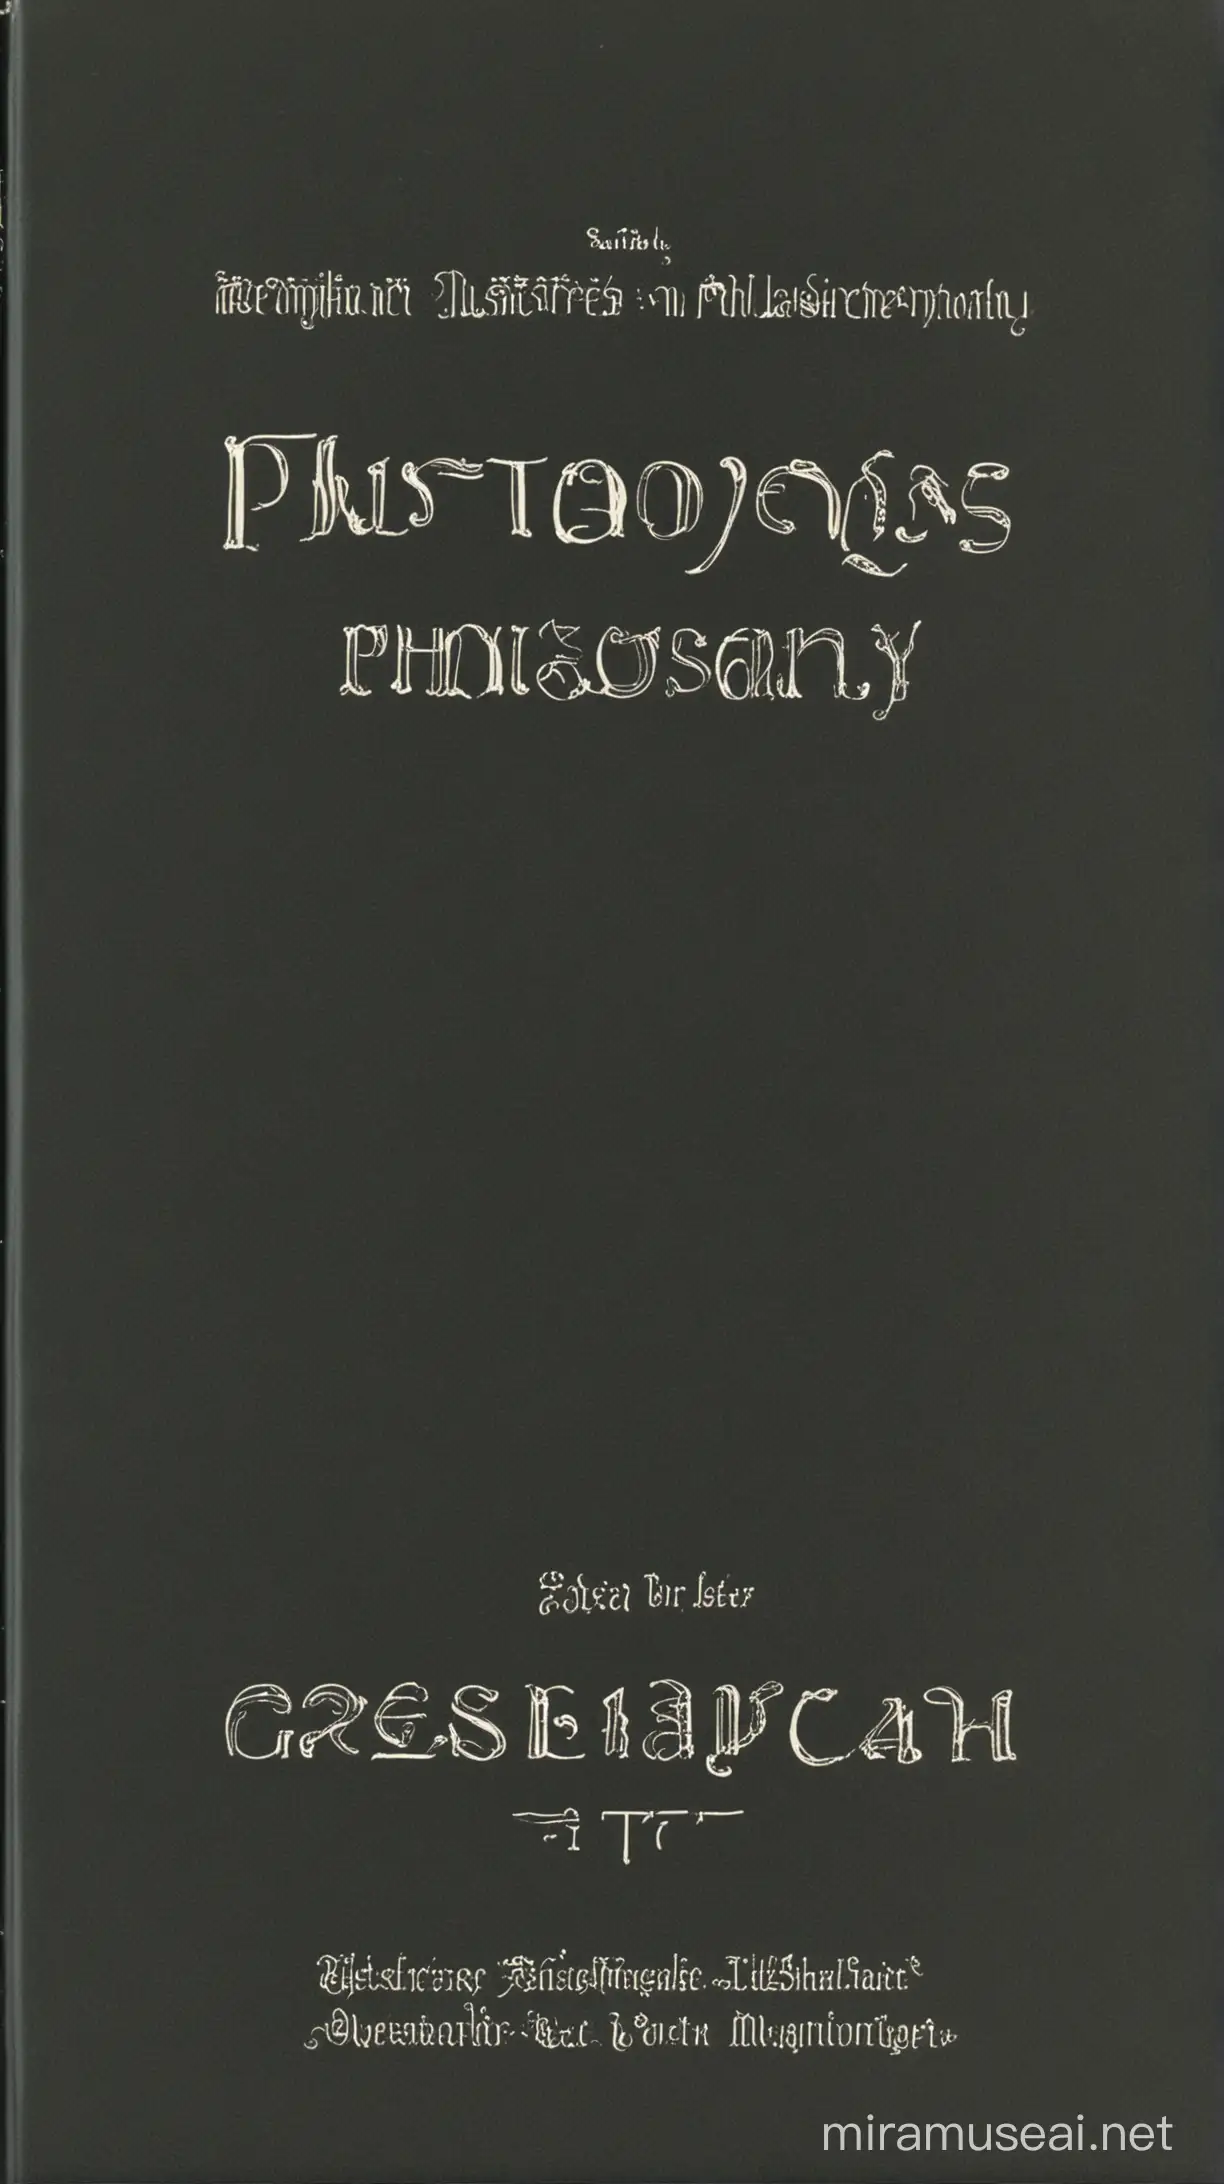 German Masters in philosophy Book cover 1970